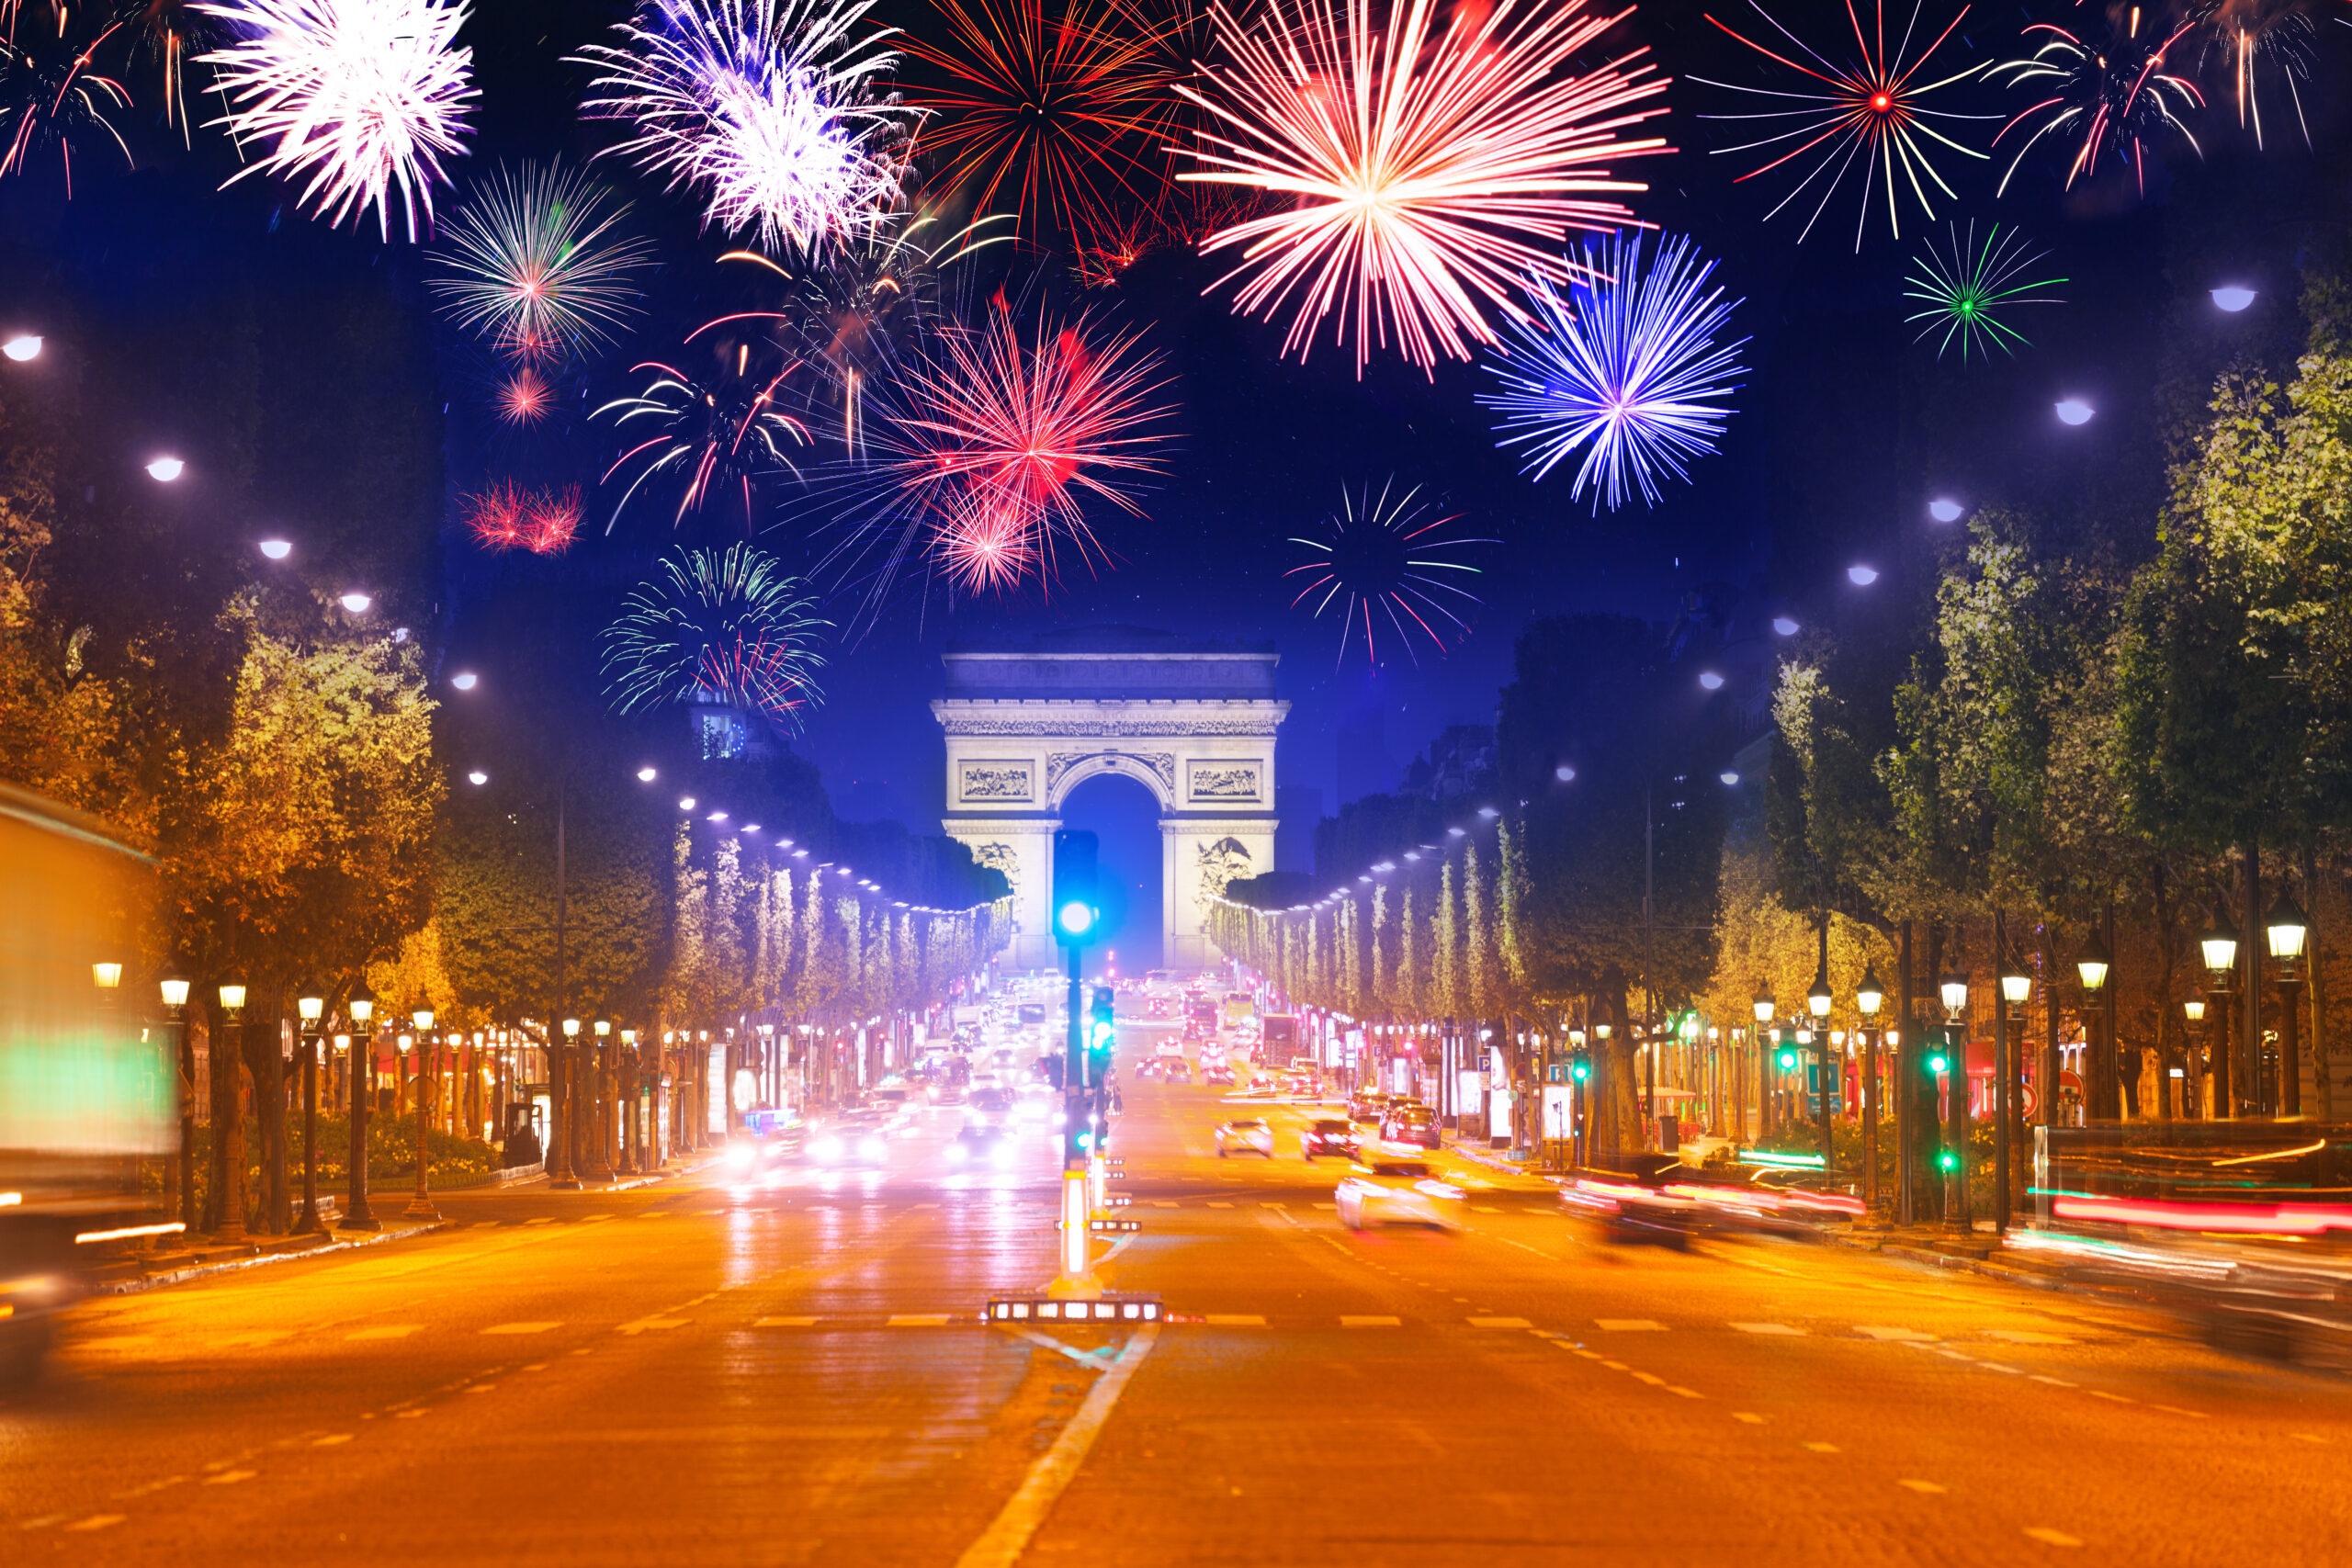 Novoletni Pariz in Eurodisney 5 dni